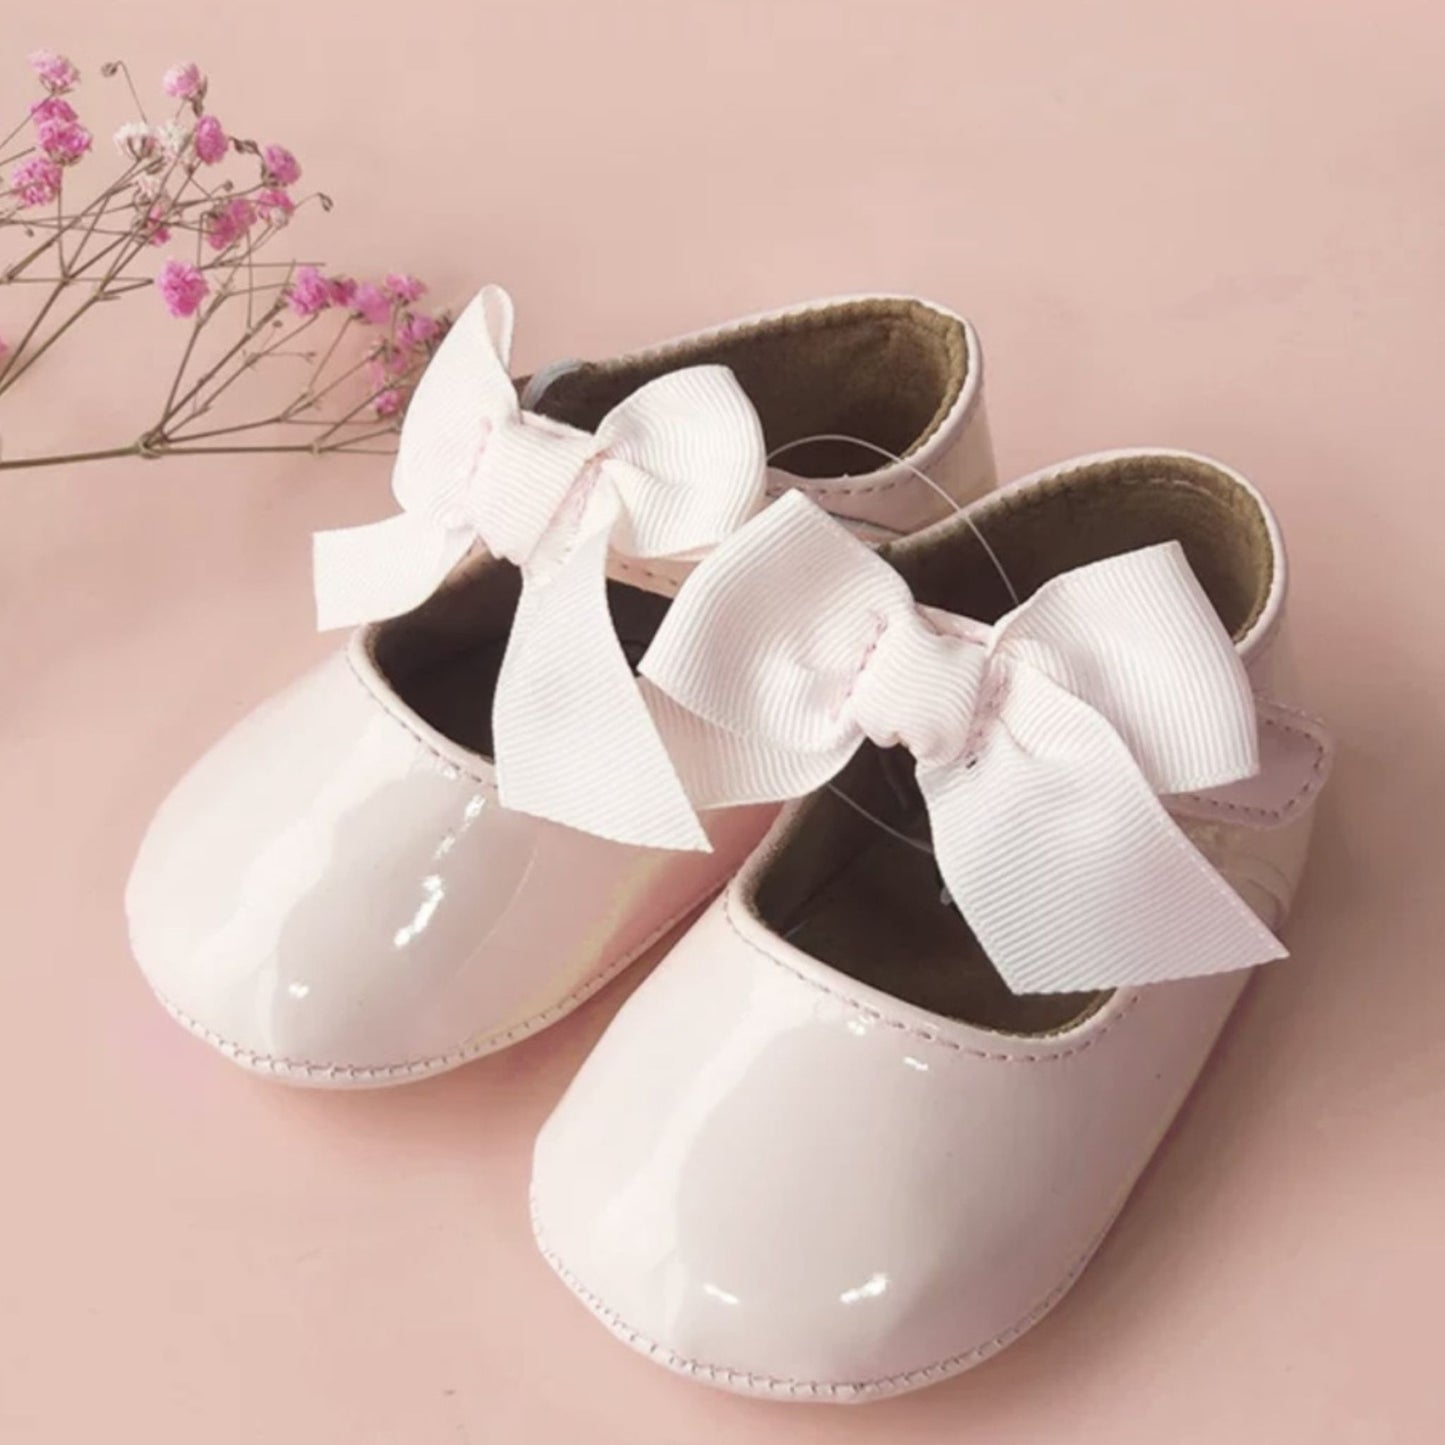 Oriental Elegance Baby Girl Gift Set 3-6 Months